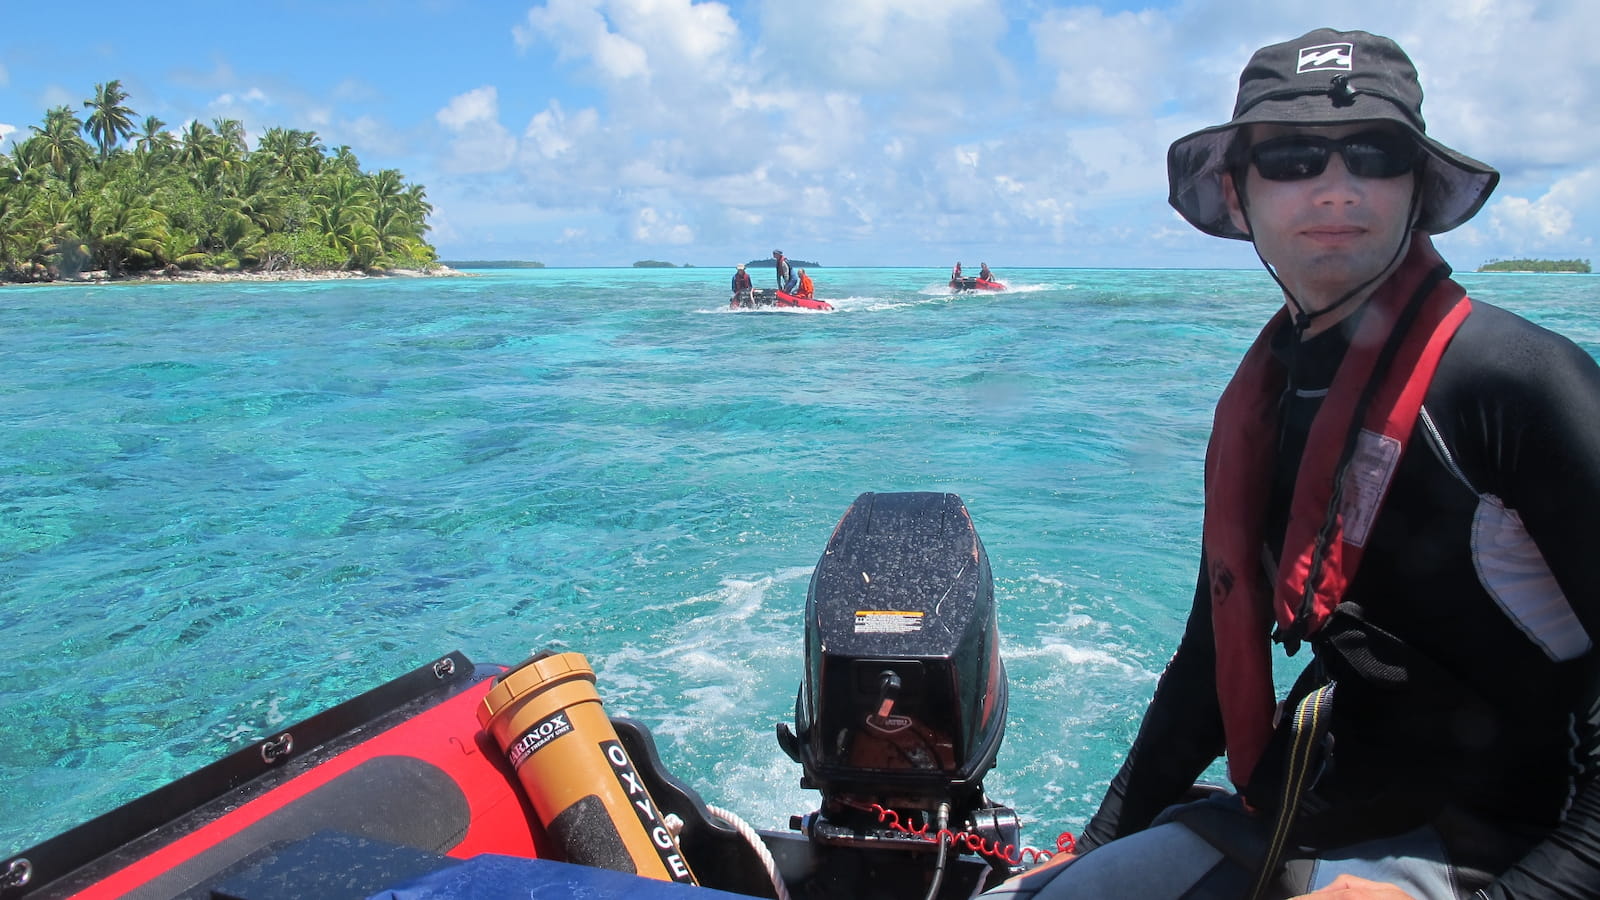 Professor Nick Graham pilots a small dinghy across bright blue seas